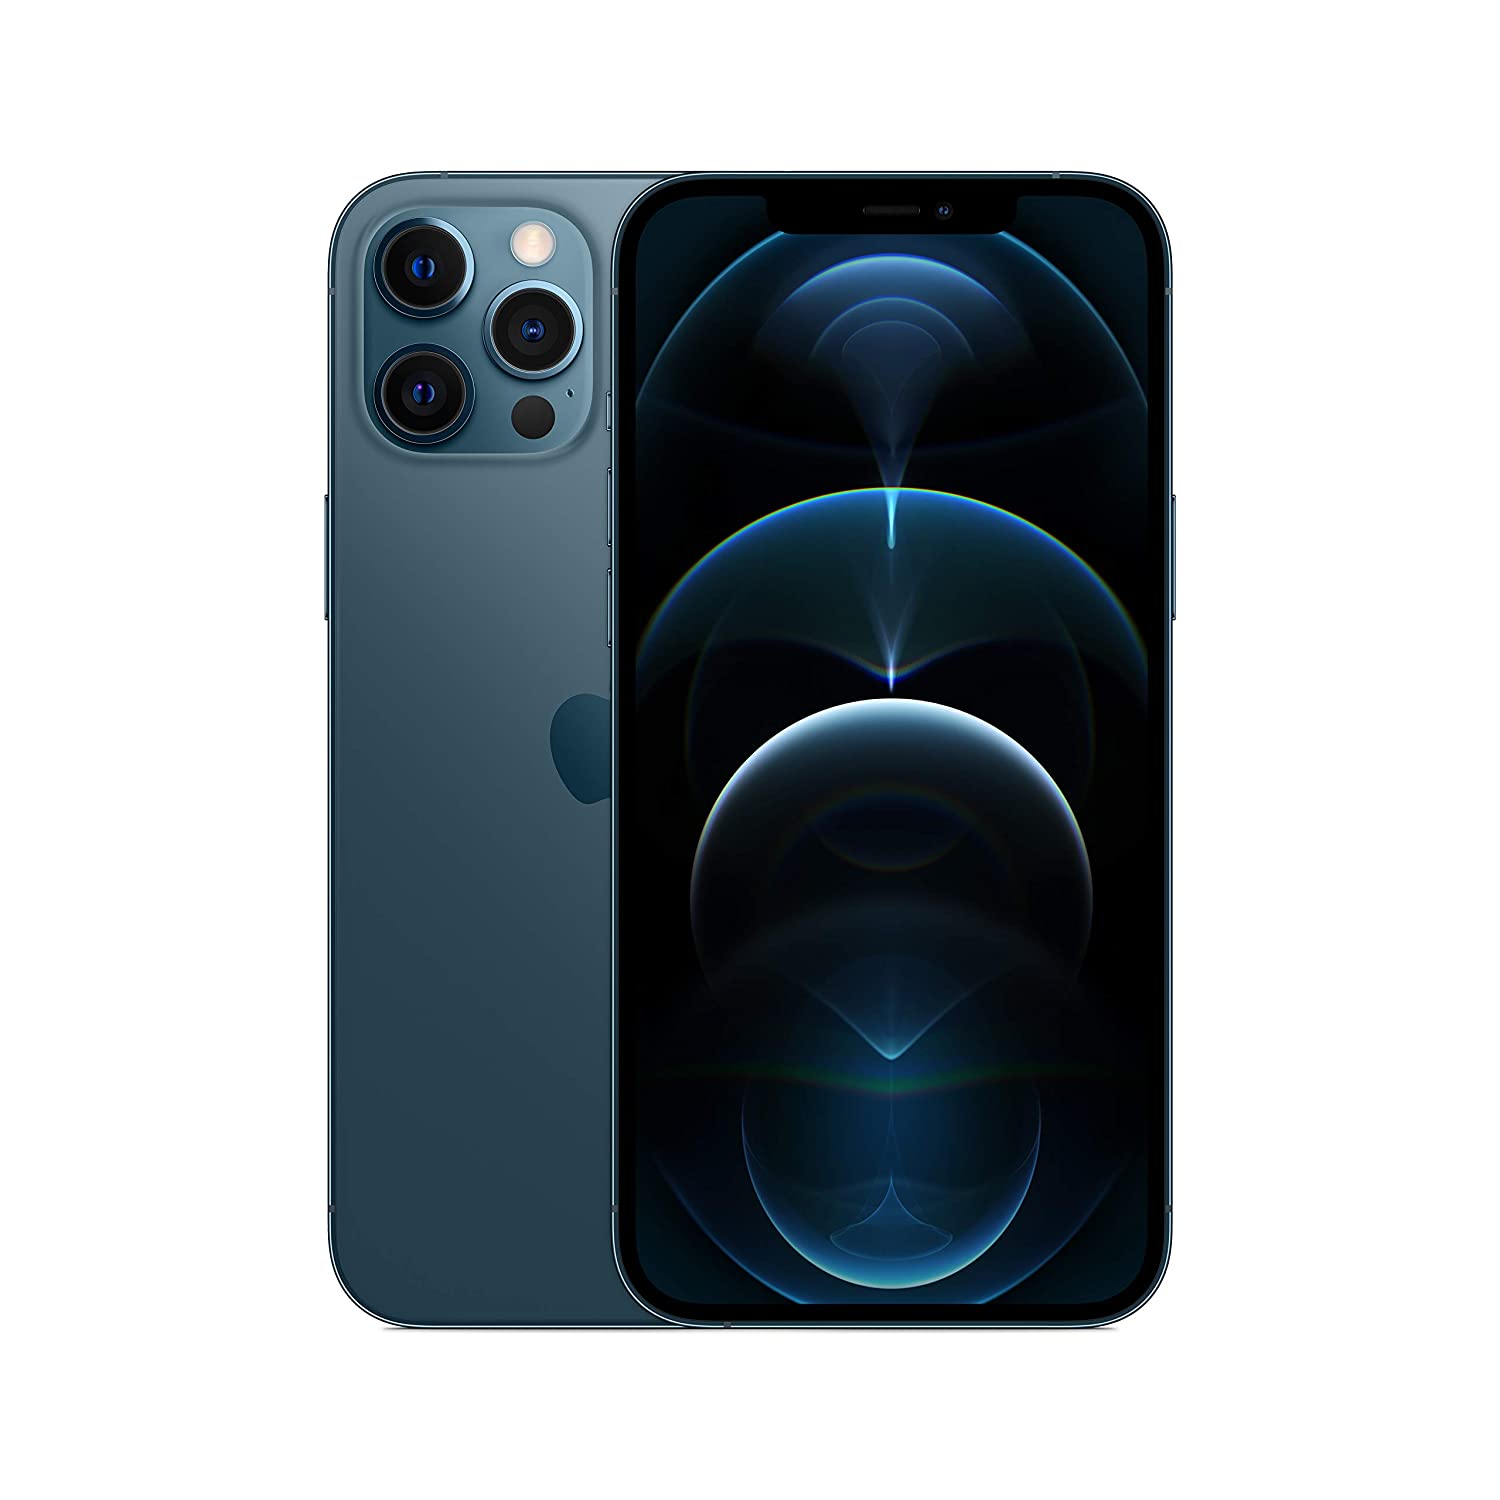 Apple Iphone 12 Pro Max 6 7inches 128gb Rom 6gb Ram Blue Single Sim Purch Gadgets